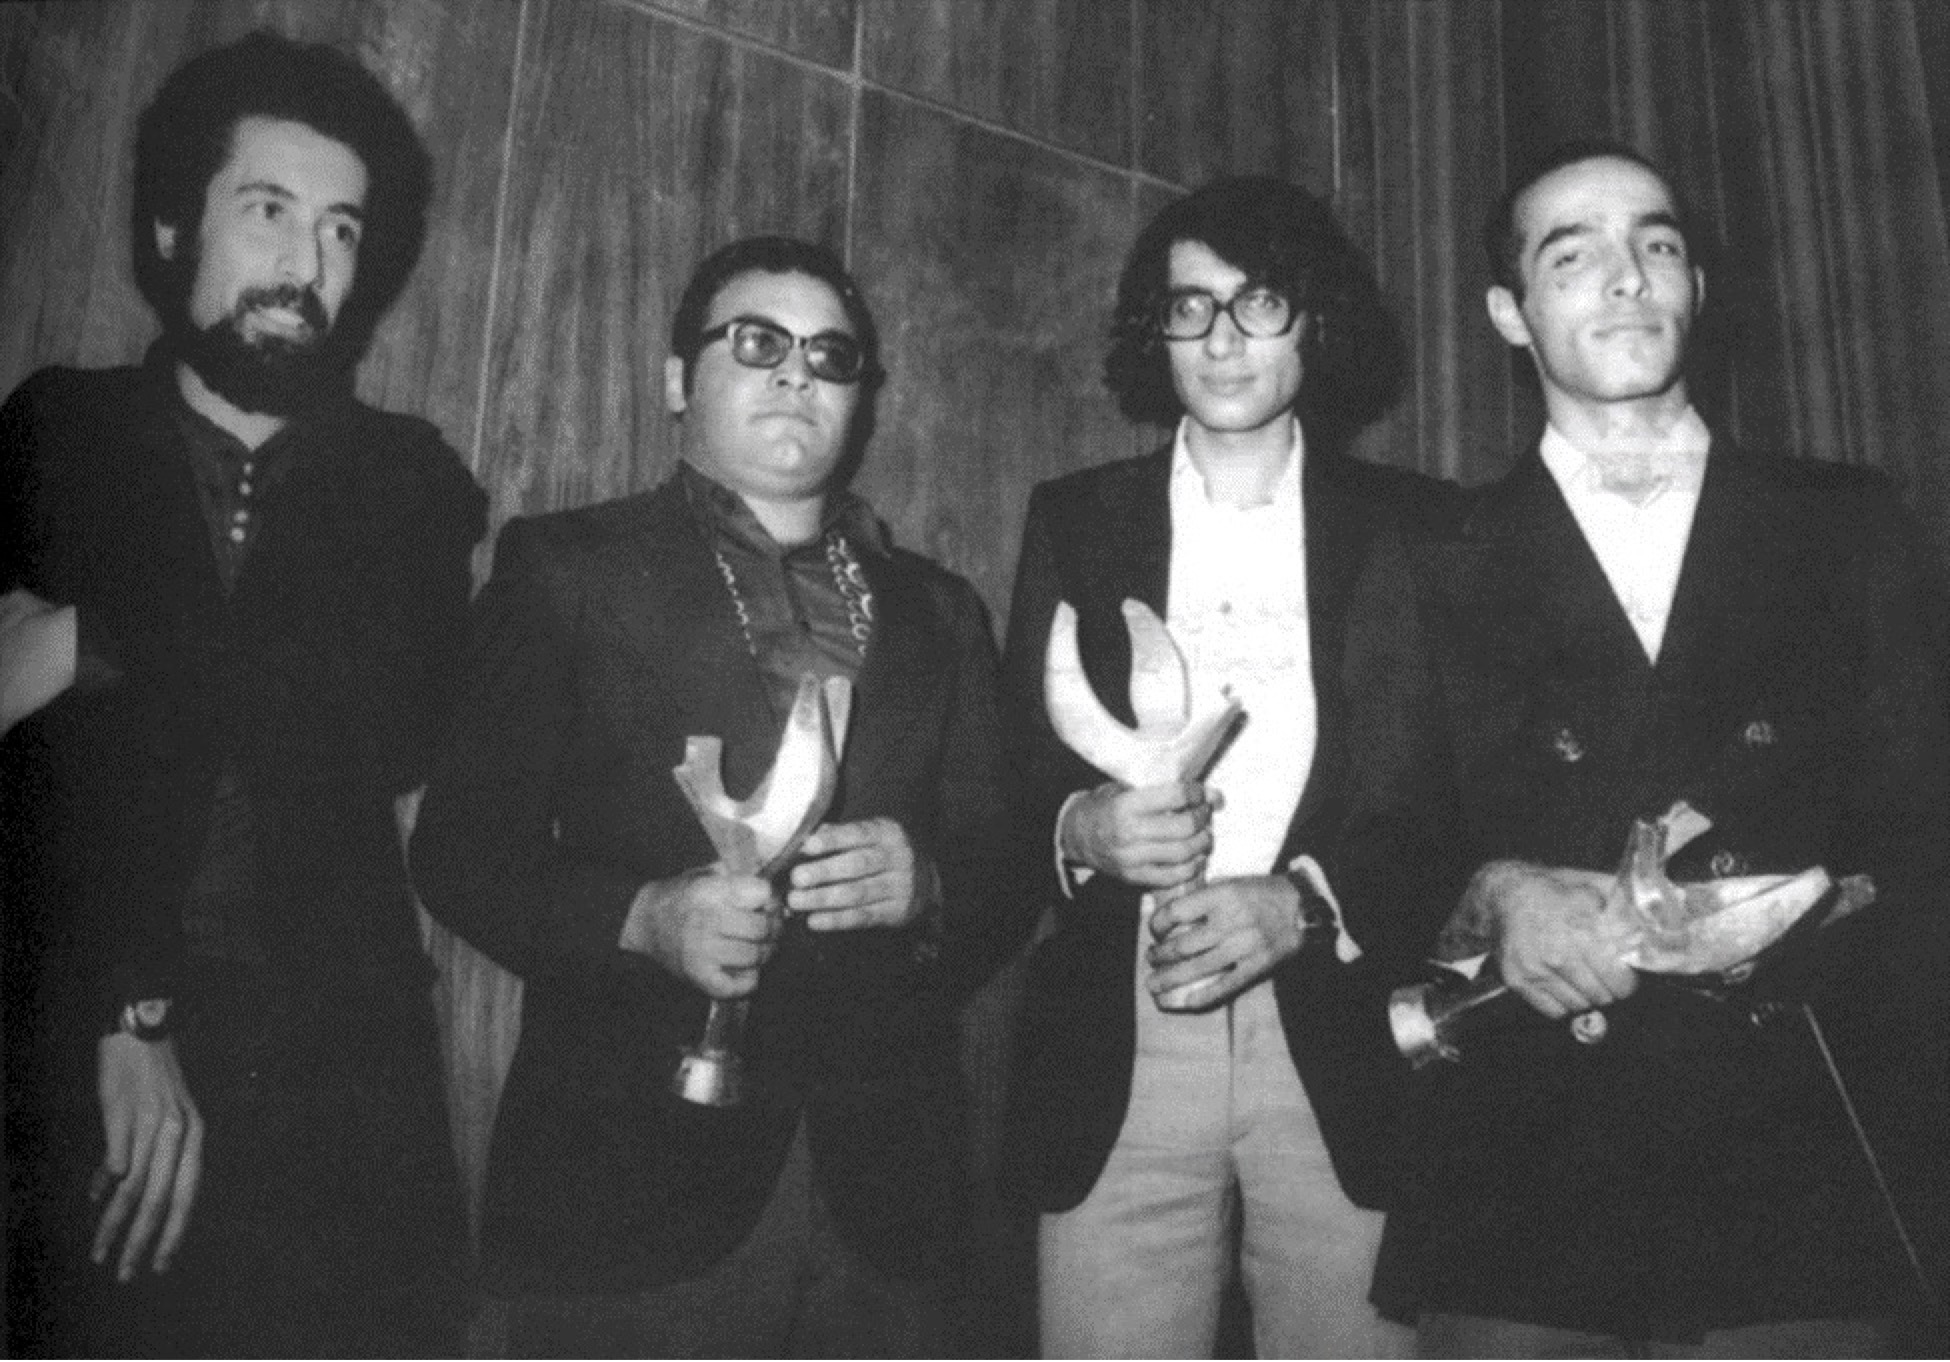 From left to right: Ibrahim Haghighi, Zavan Ghoukasian, Hassan Bani Hashemi, Kianoush Ayari winners of Free Cinema Film Festival in 1974.